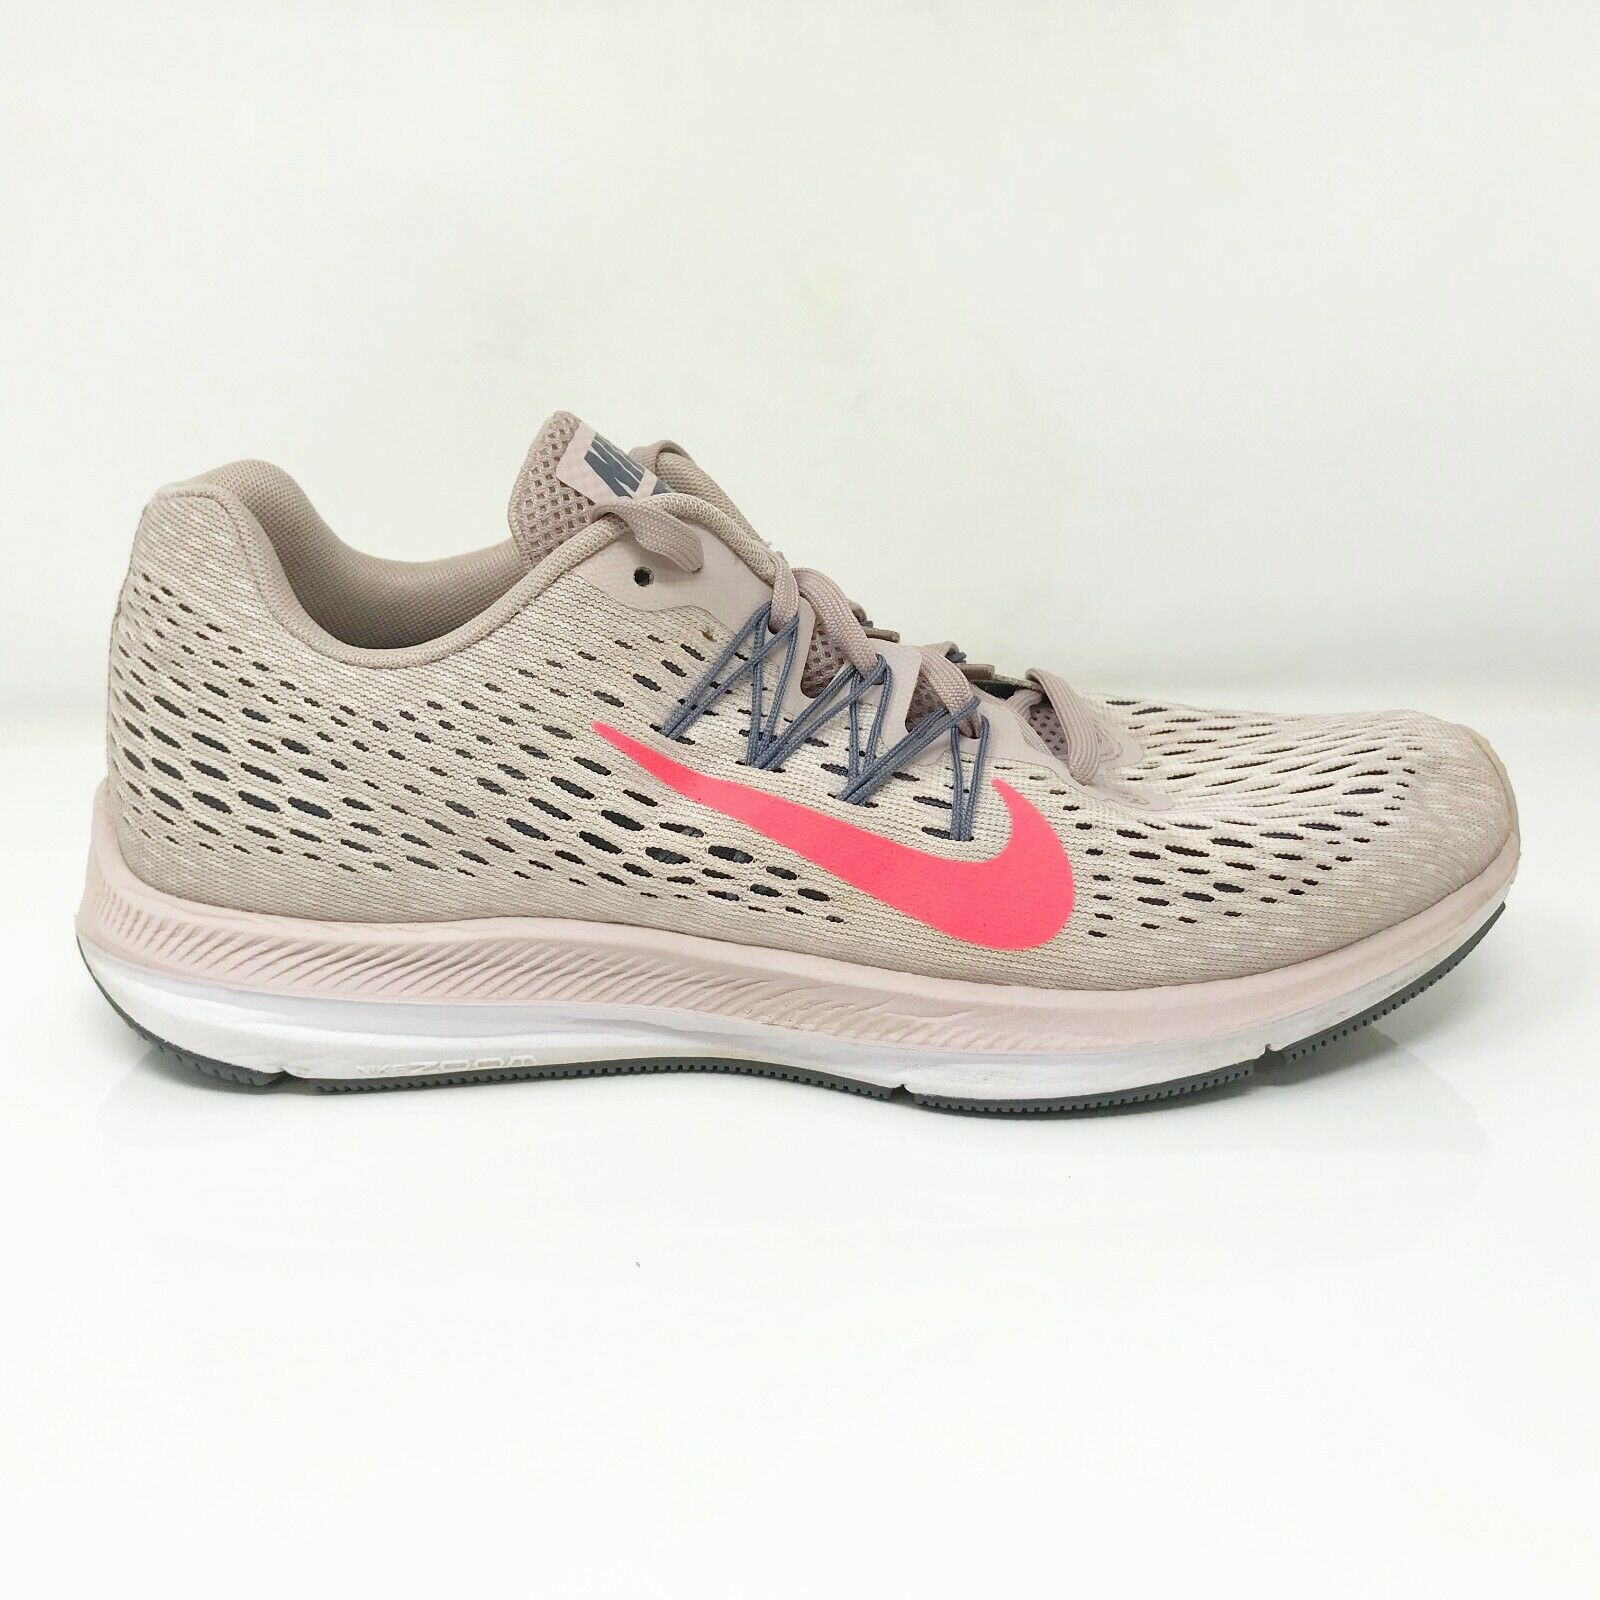 Nike Womens Zoom Winflo 5 AA7414-600 Beige Running Shoes Sneakers Size 9.5